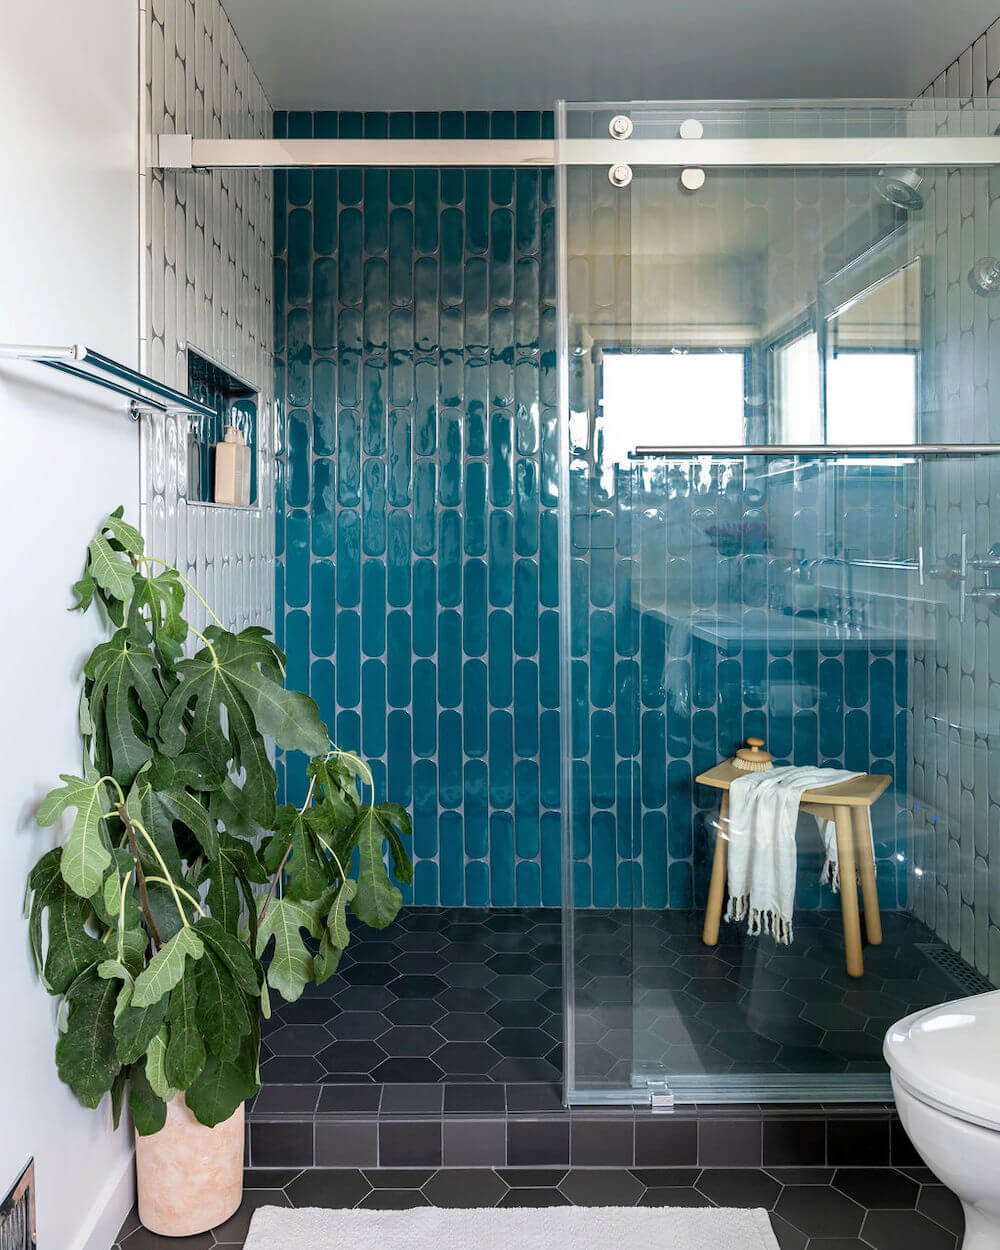 Sequoyah Oakland Bathroom Remodel - Teal Round Edge Shower Tiles.jpg